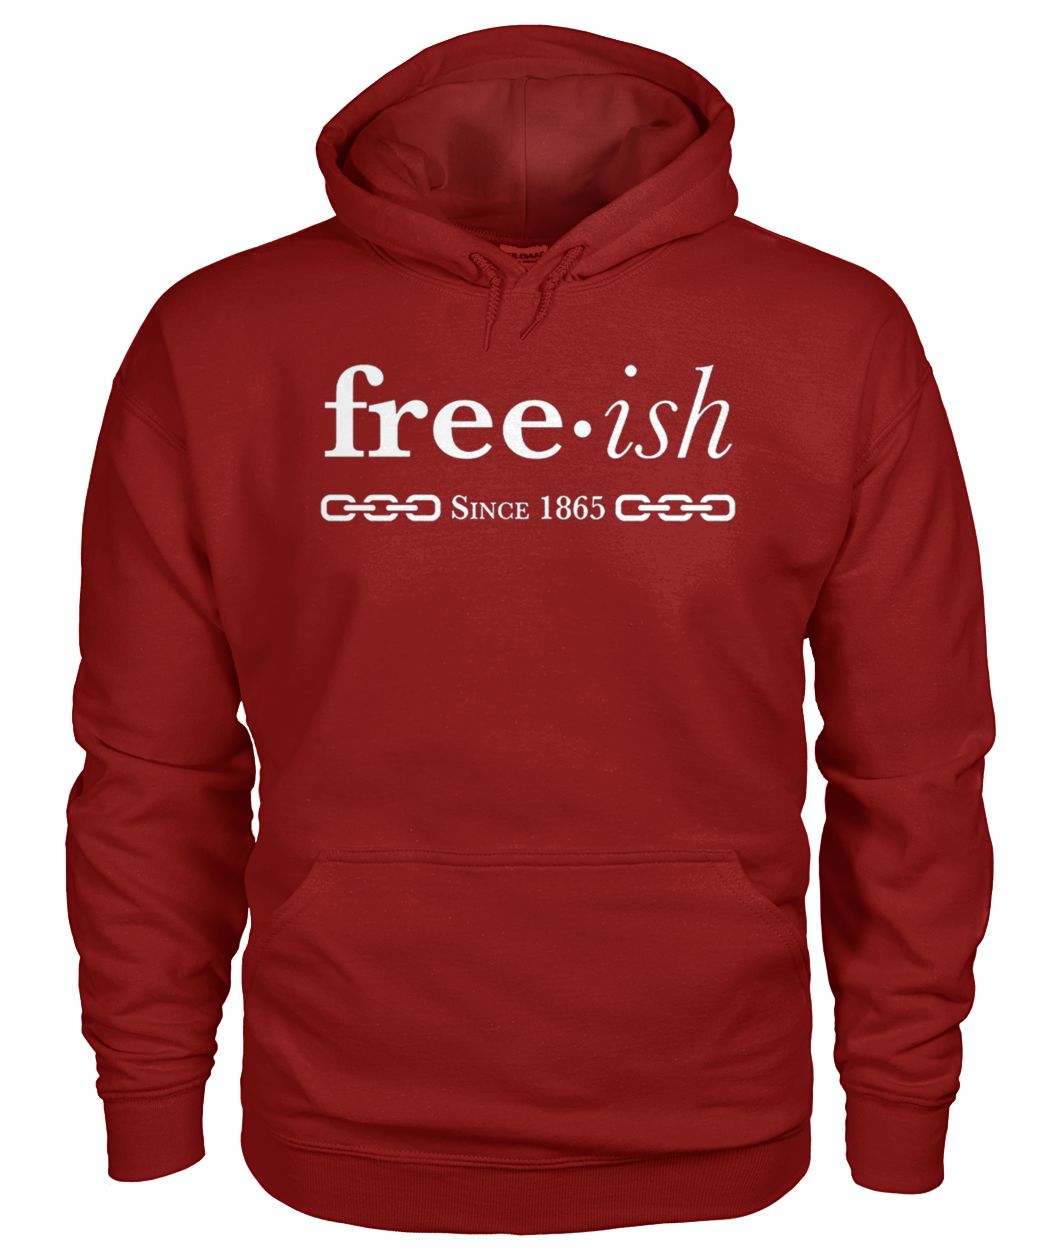 Free ish since 1965 gildan hoodie